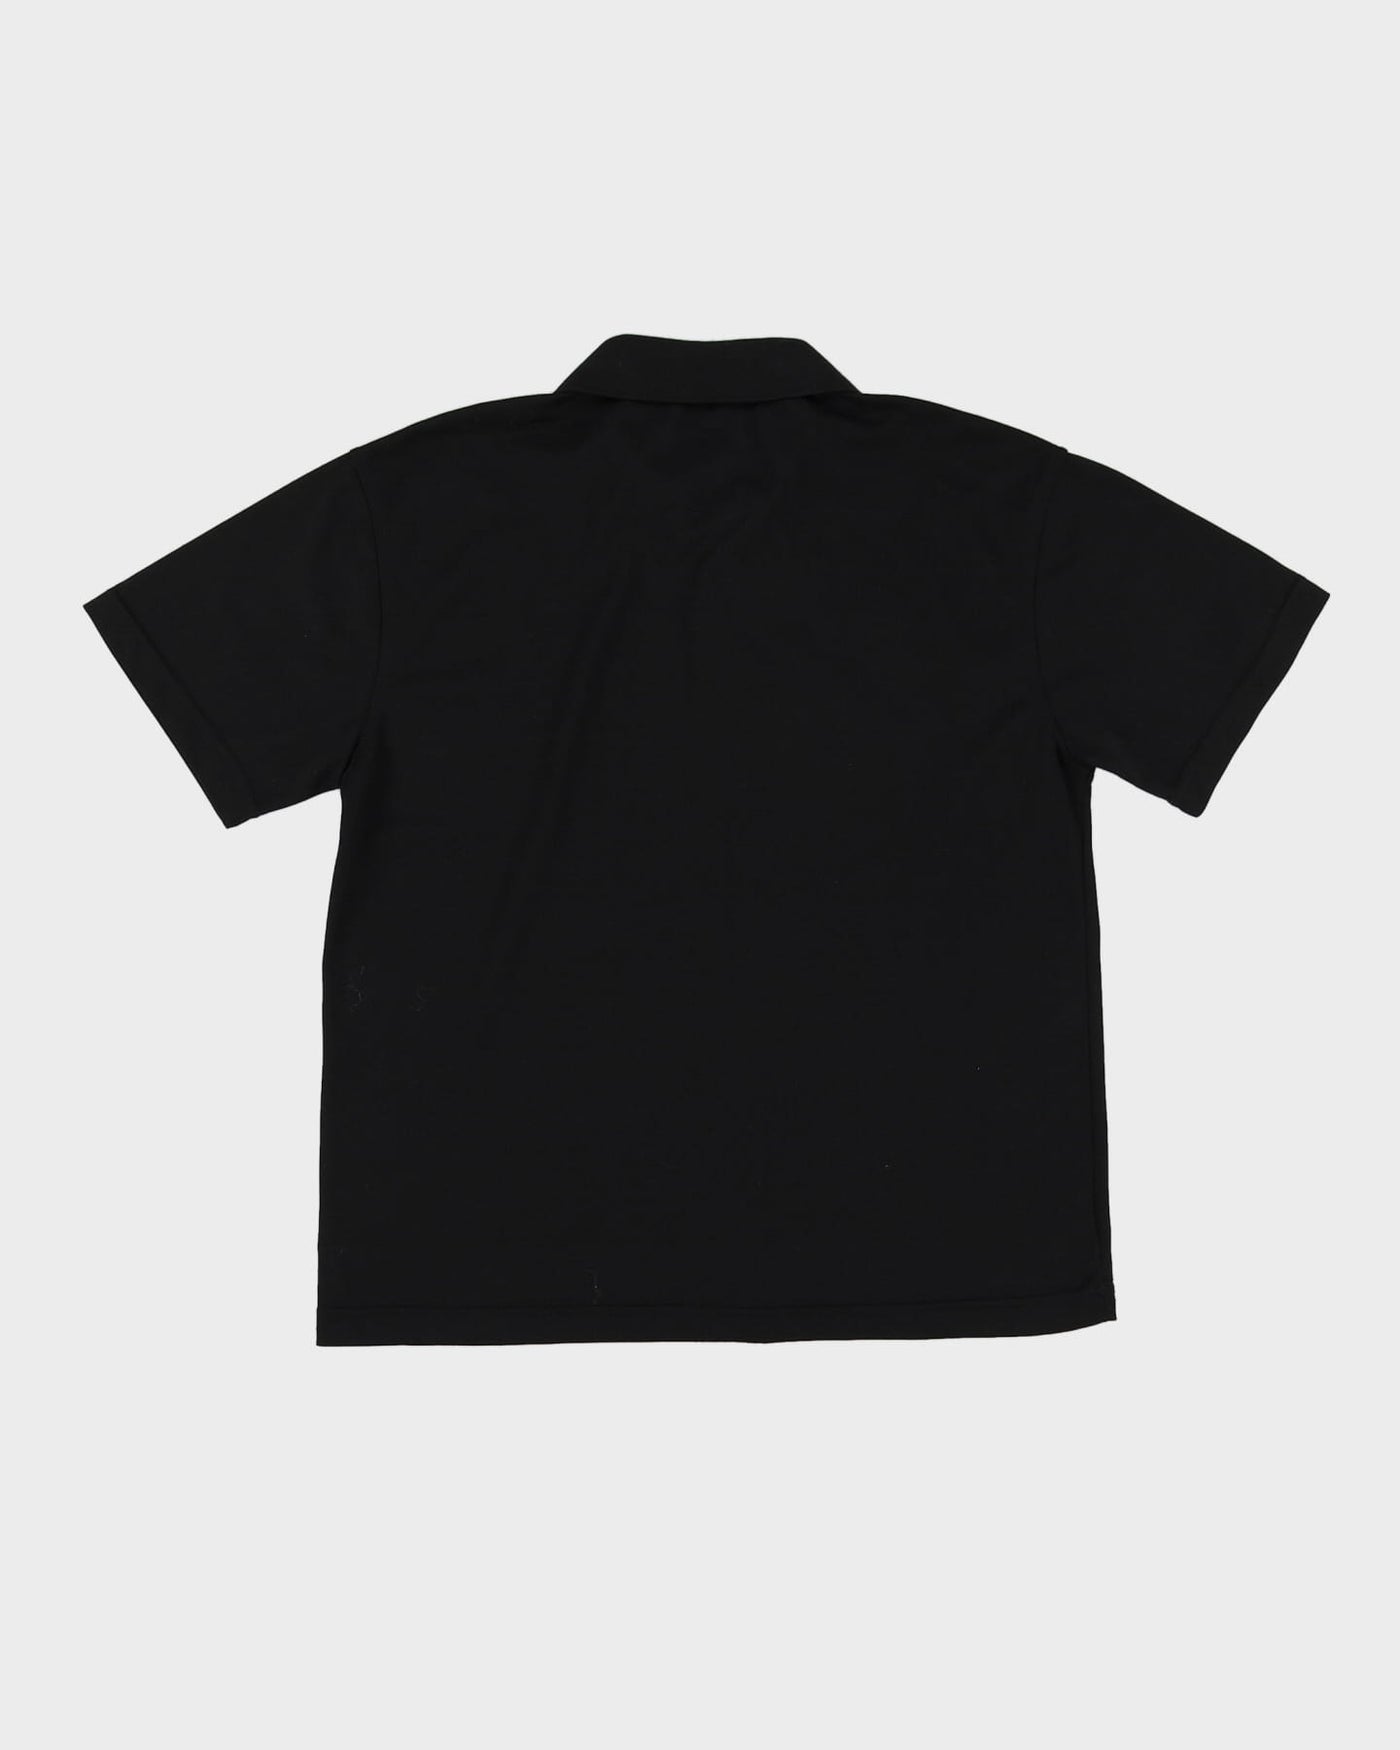 Giorgio Armani Black Polo Shirt - L